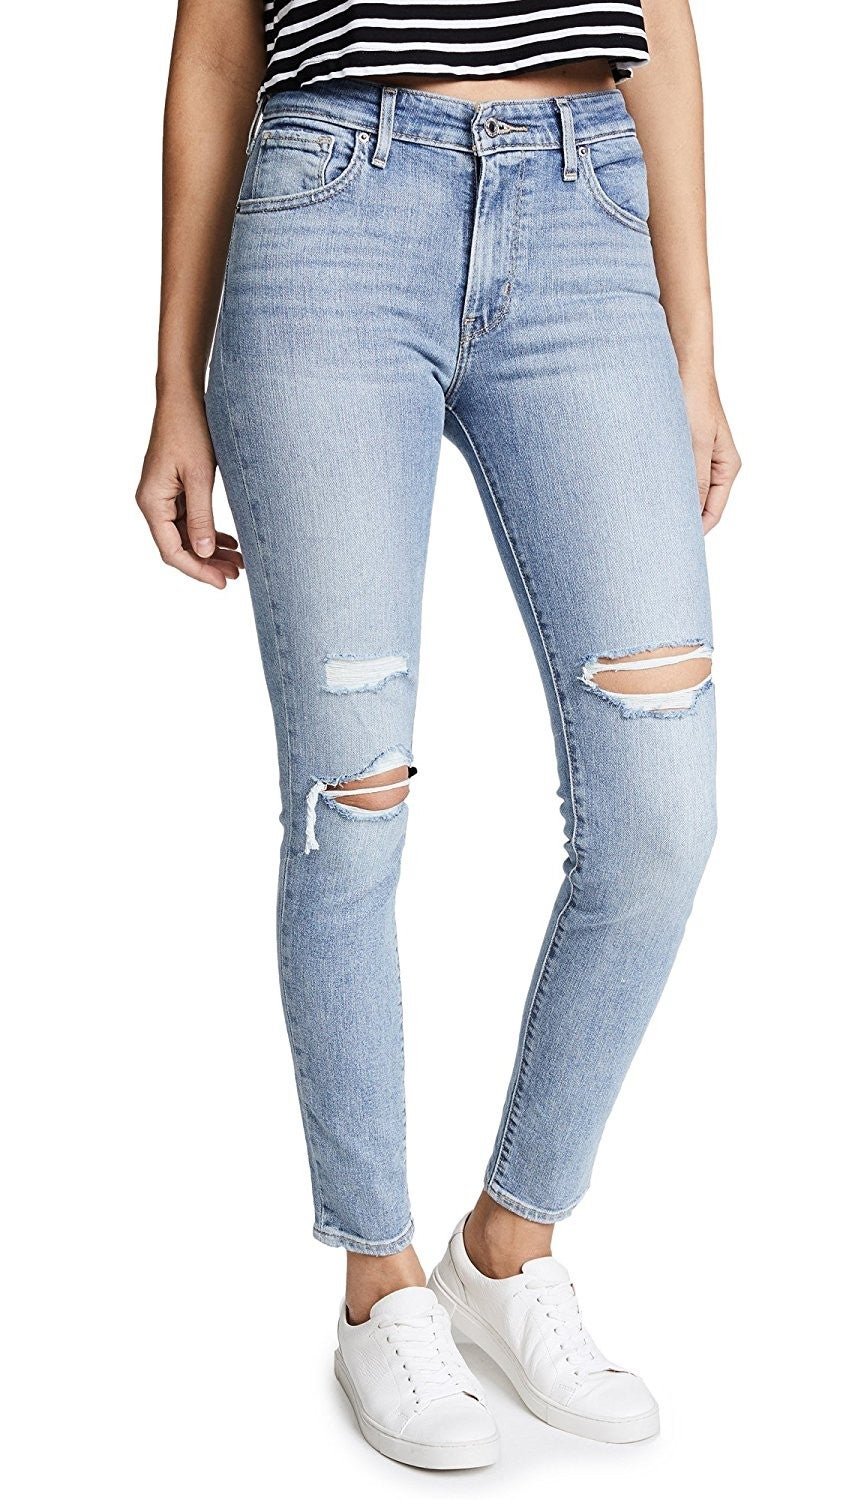 Levi's skinny jeans